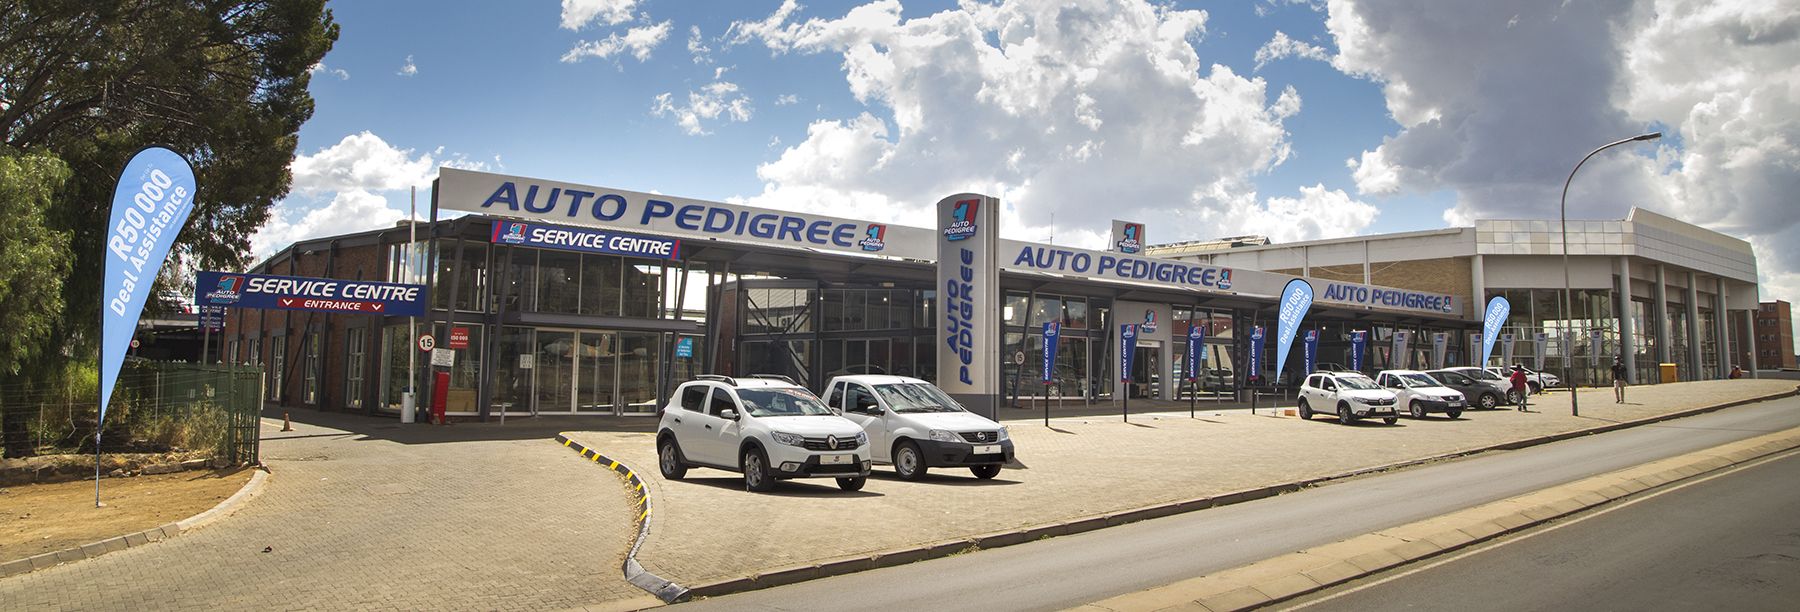 Auto Pedigree Bloemfontein service centre